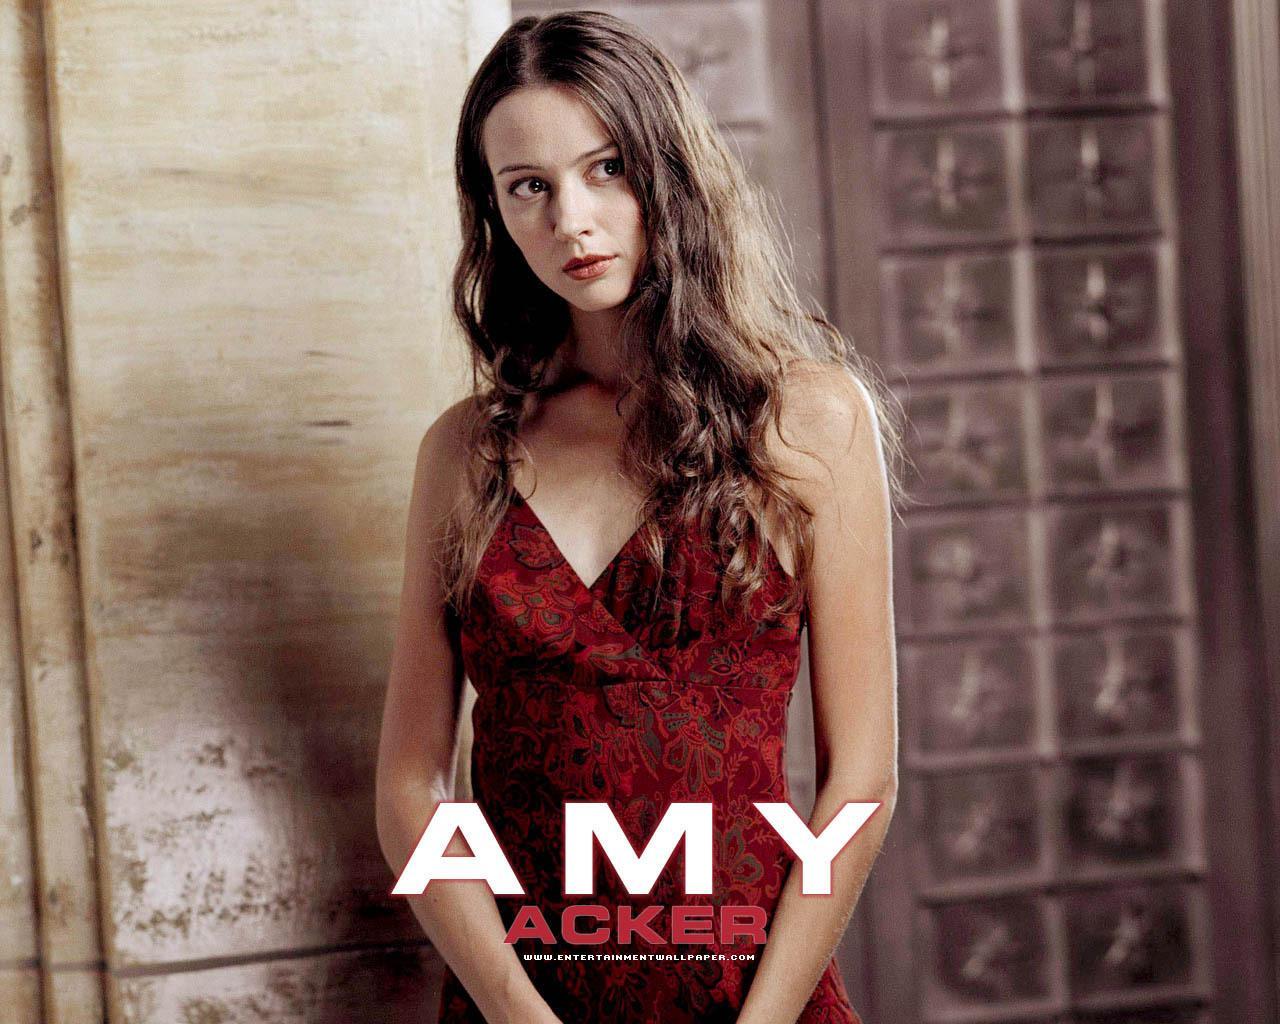 Amy Acker  IMDb